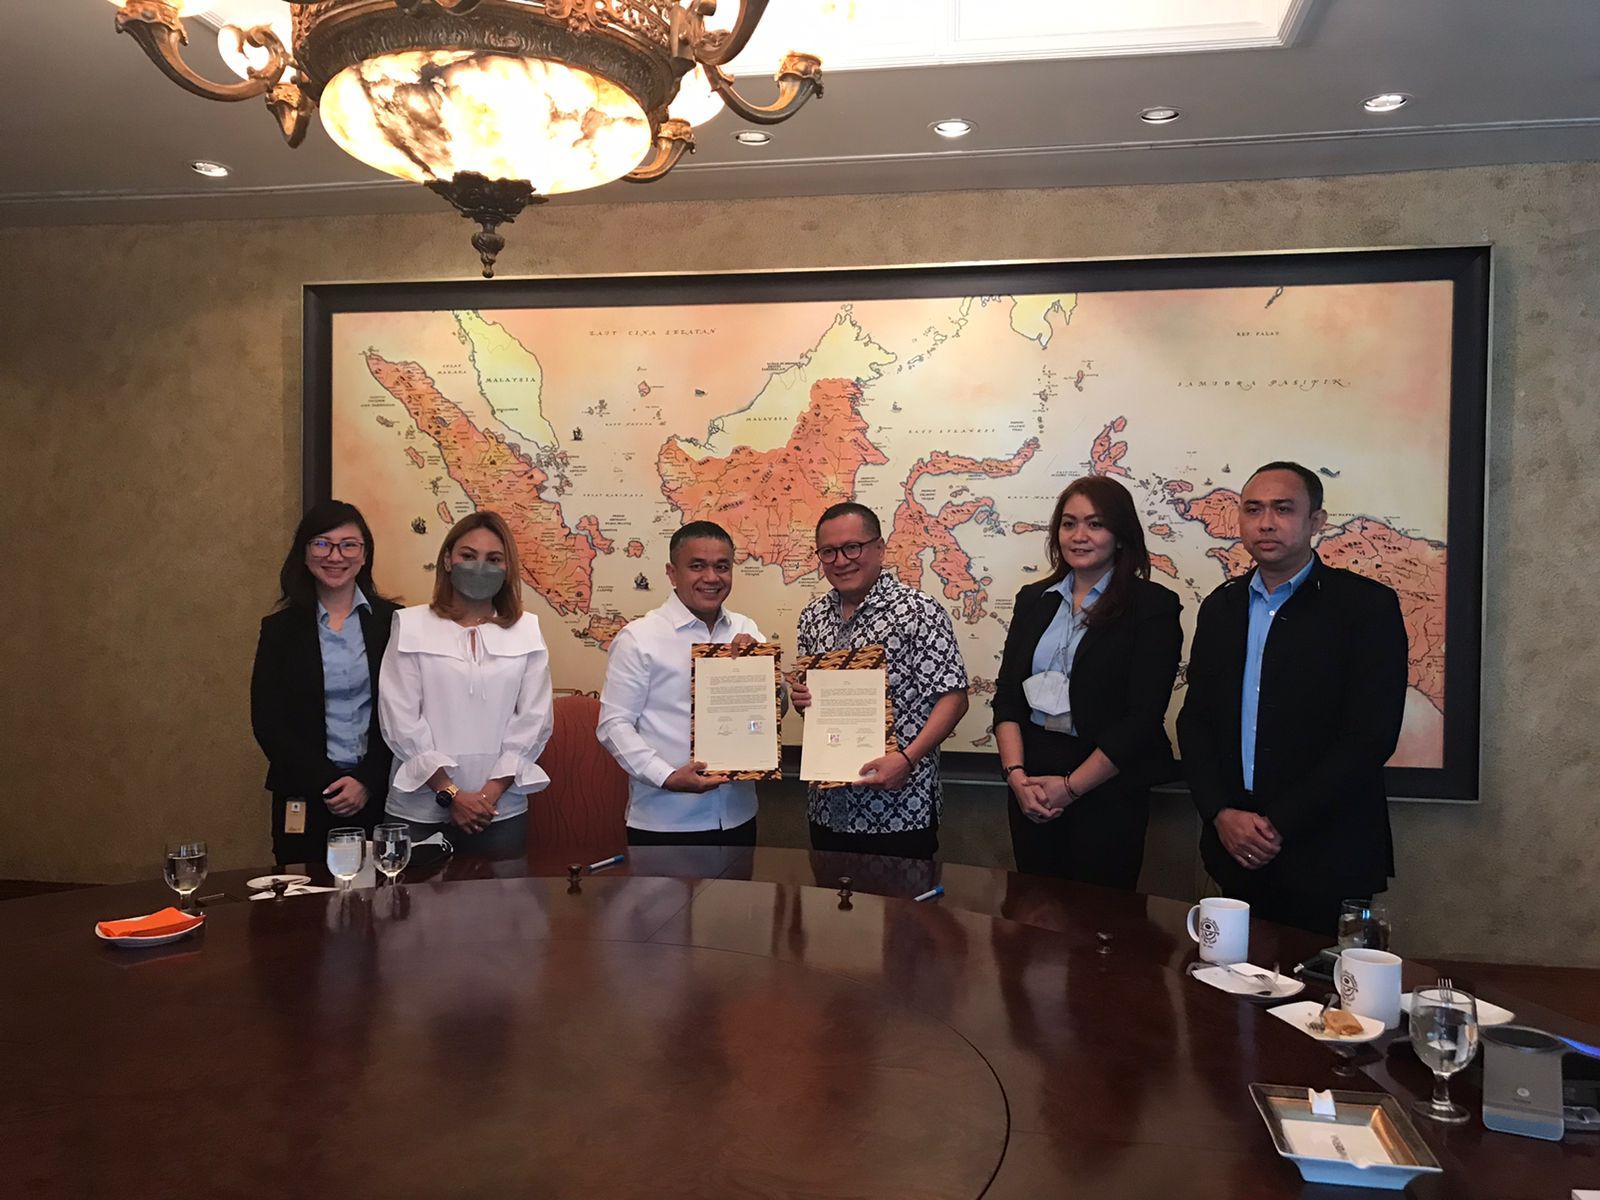 Walikota Palu Hadiyanto Rasyid dan Director of Fundraising PSF Elan Merdy menandatangani Nota Kesepahaman Kerjasama Peningkatan Kualitas Pendidikan di Kota Palu, Sulawesi Tengah, 30 Nopember 2021. / PSF